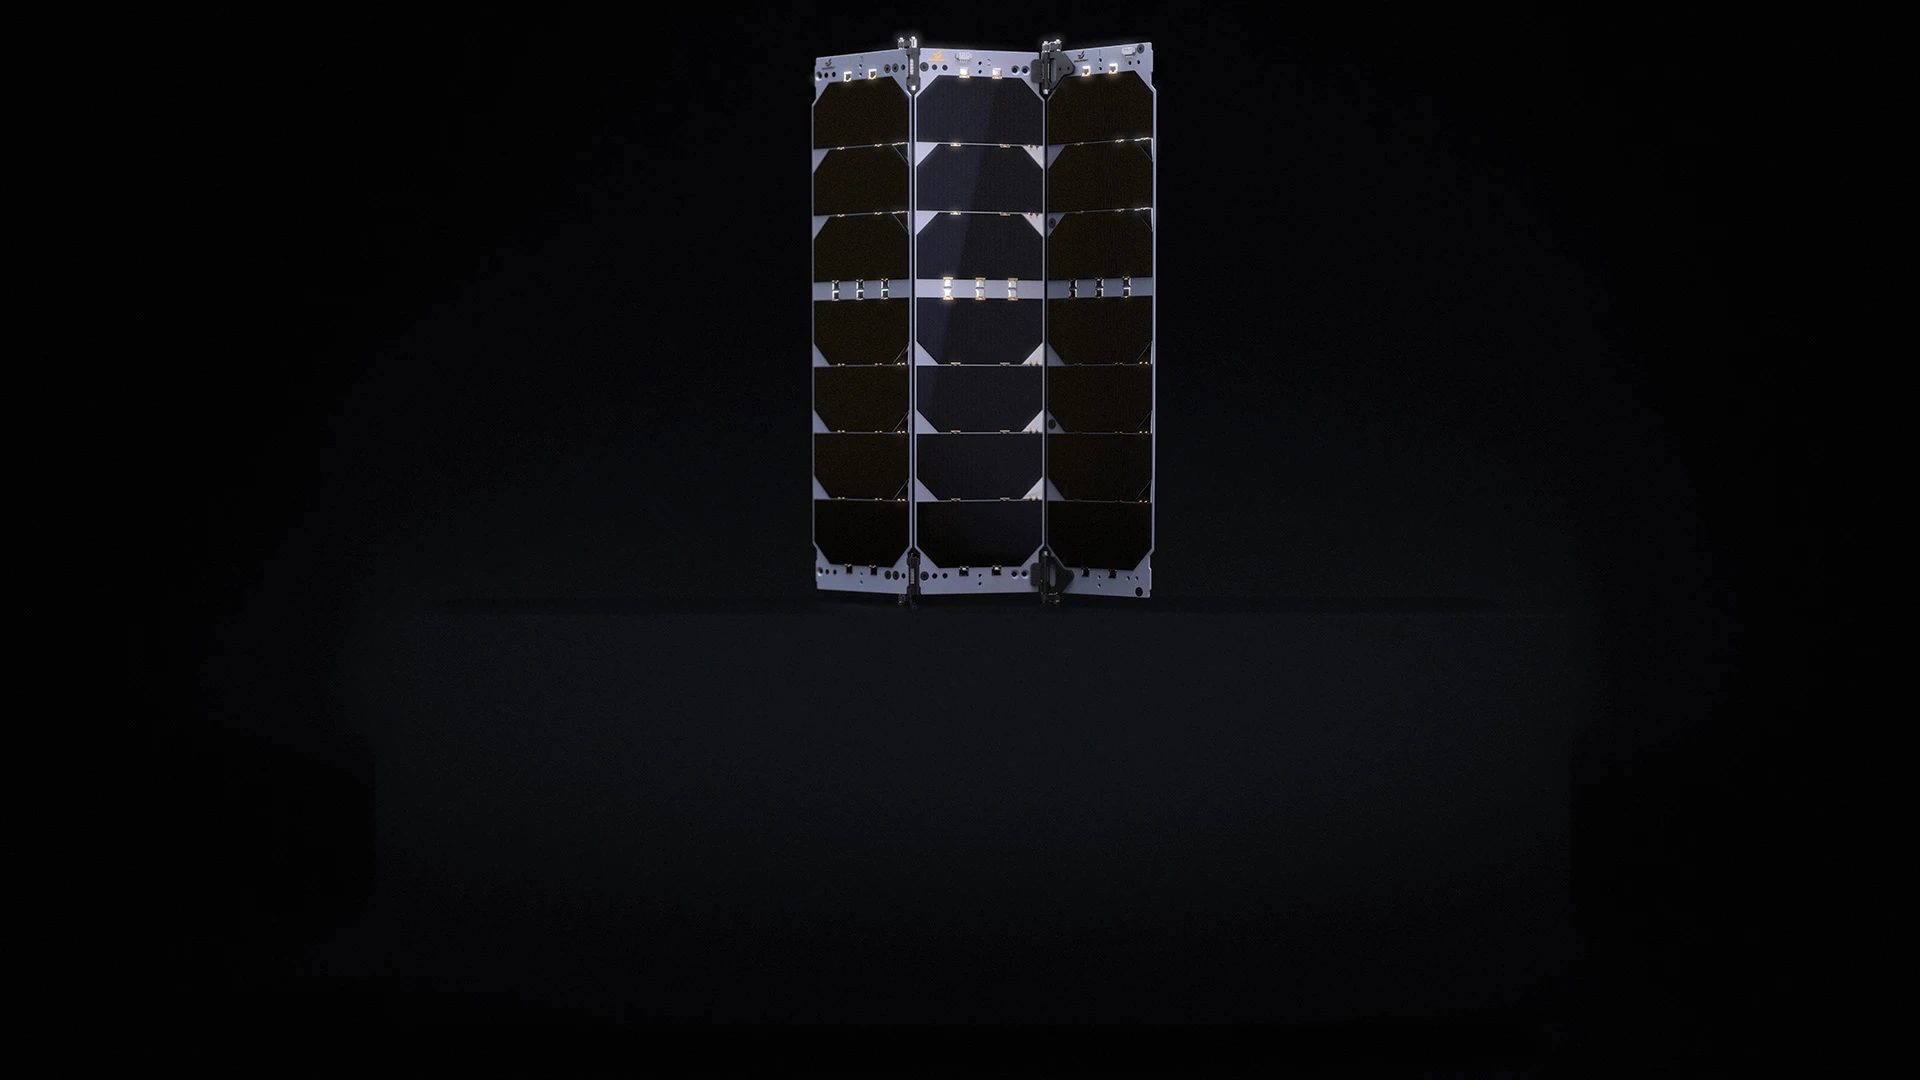 3U X Y Deployable Solar Array web render 4